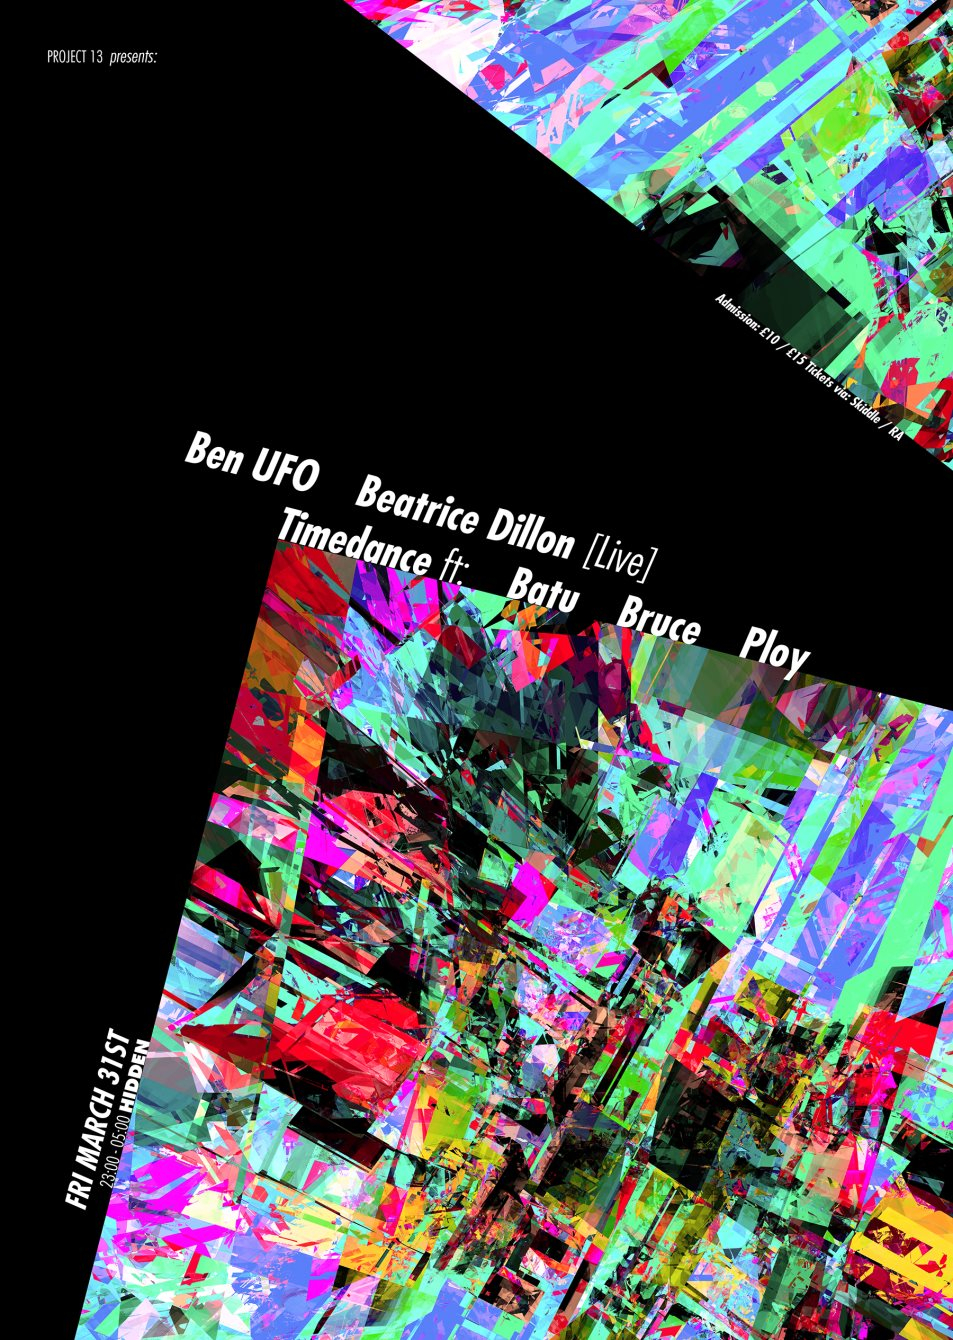 Project 13 presents: Ben UFO / Beatrice Dillon / Batu / Bruce / Ploy - Flyer front